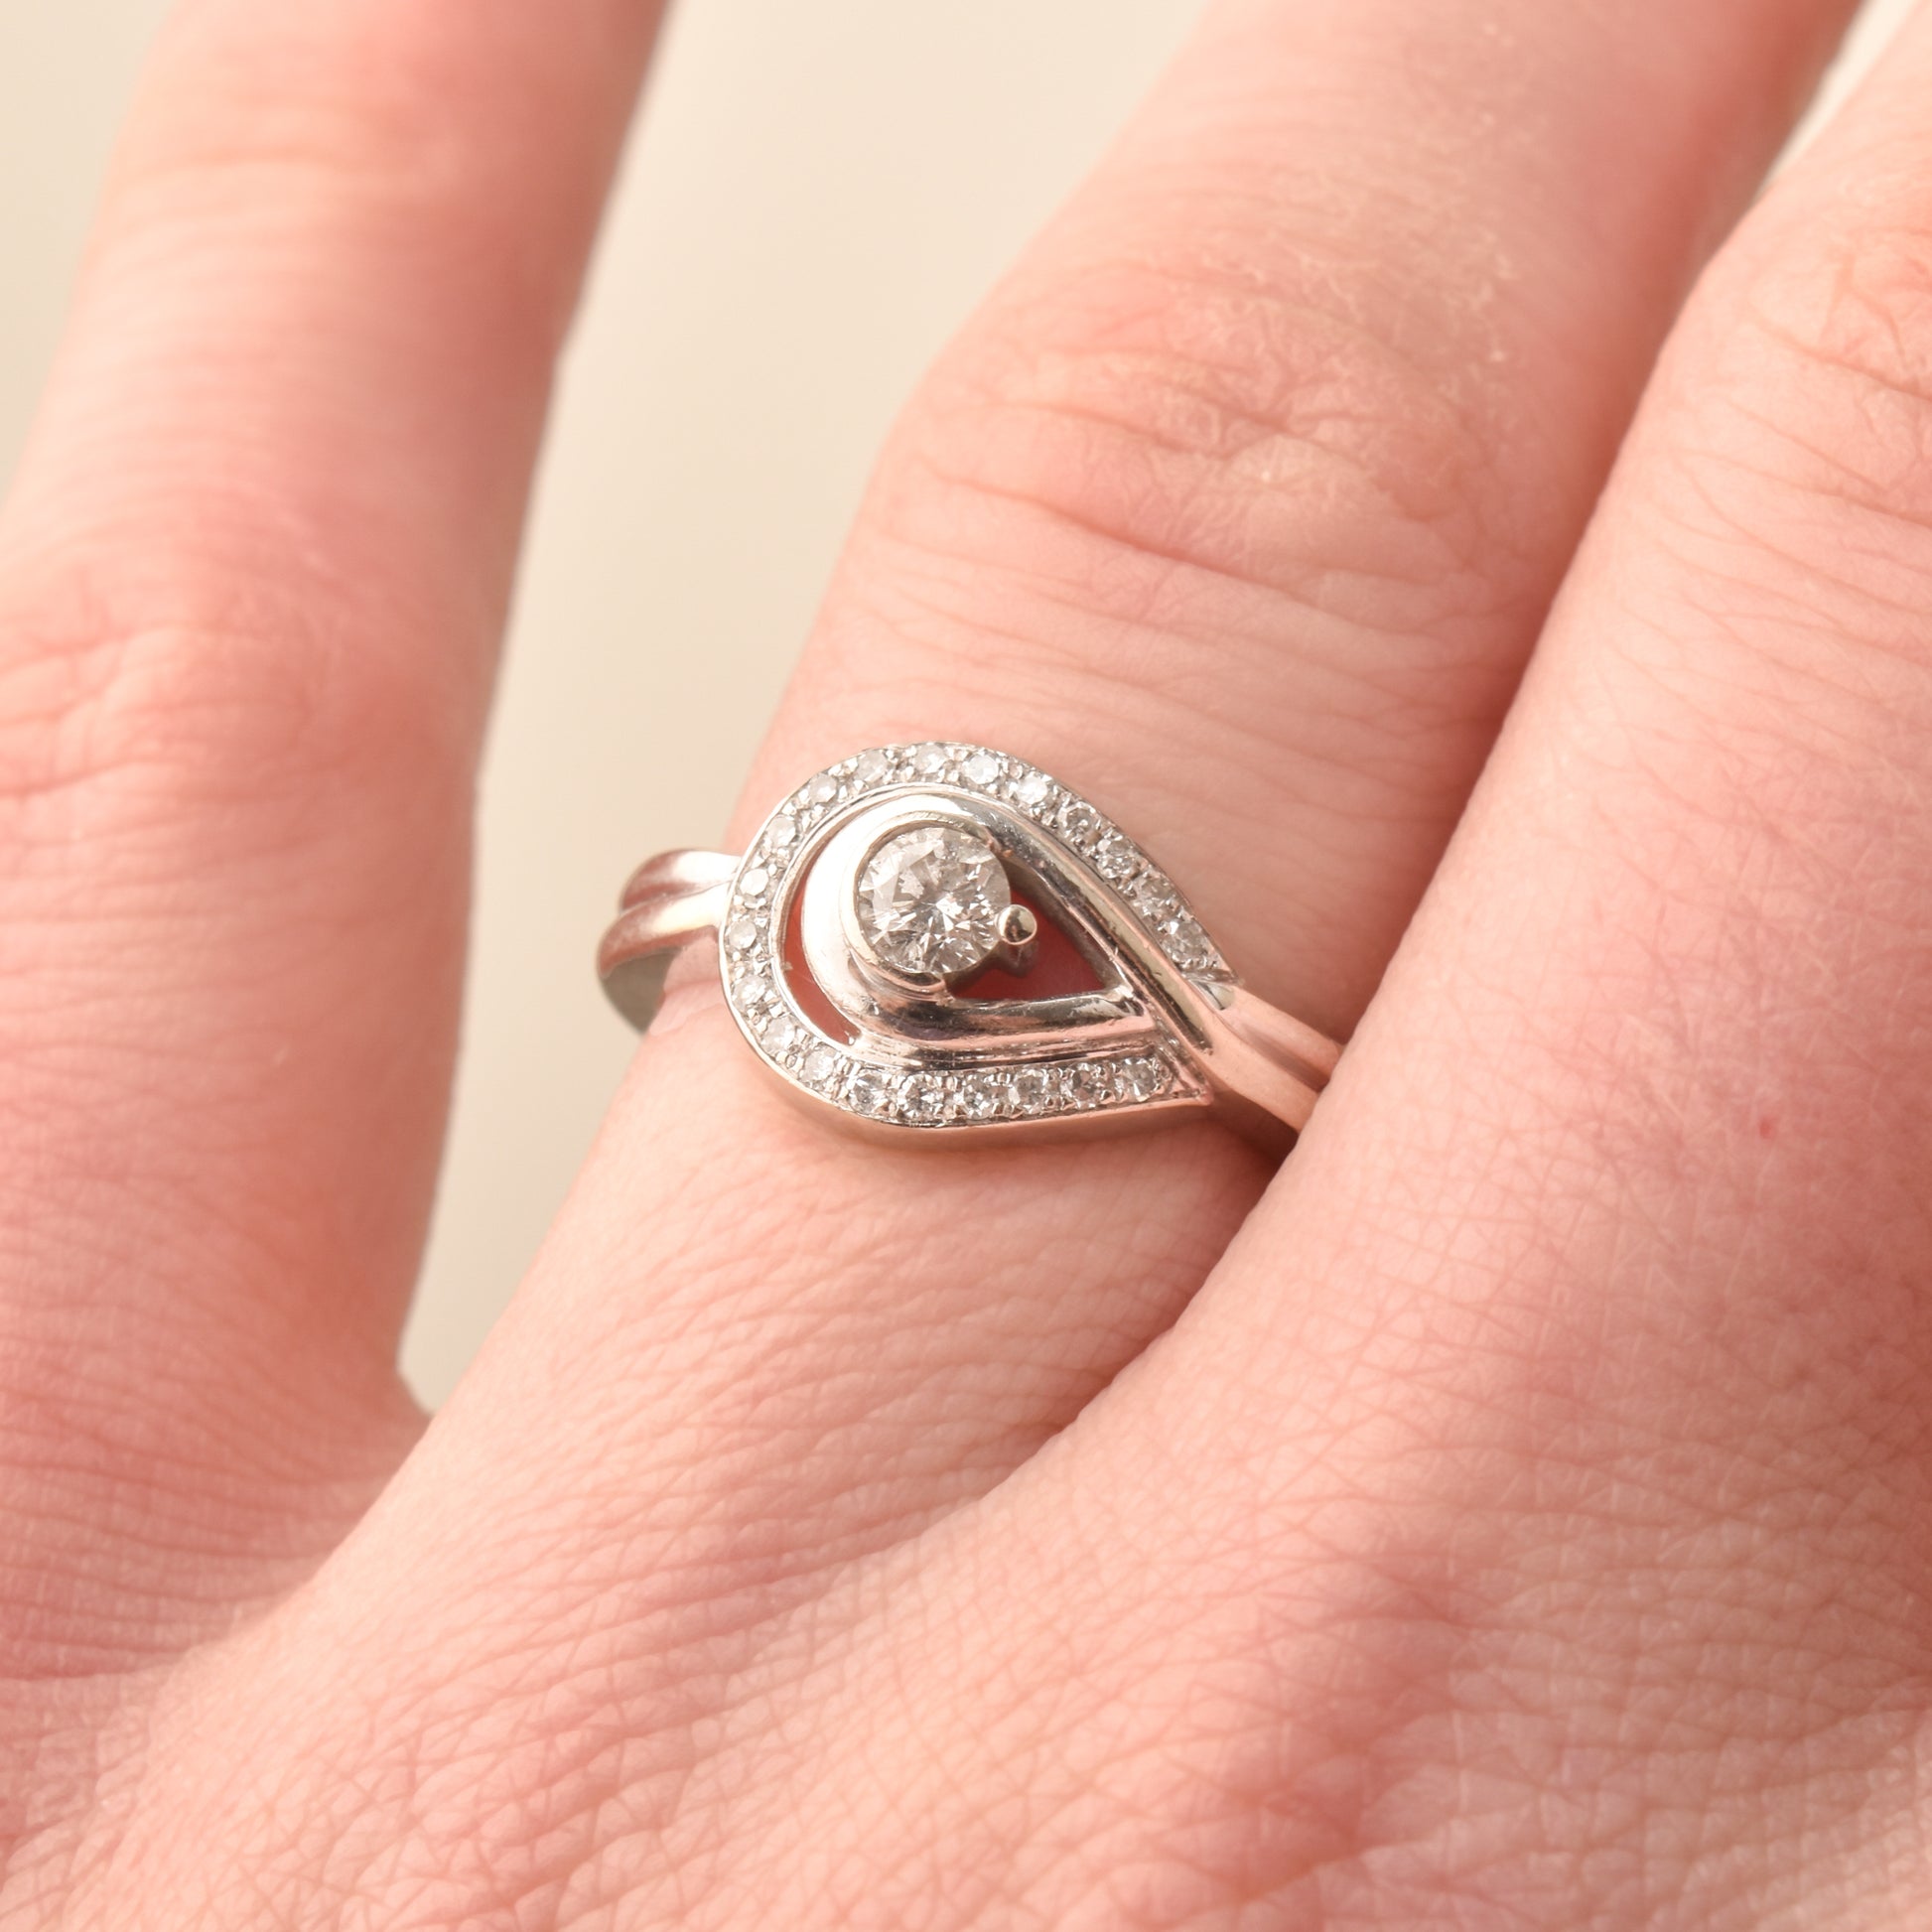 Estate 10K diamond halo engagement ring size 6.75 worn on finger showing intricate details and craftsmanship